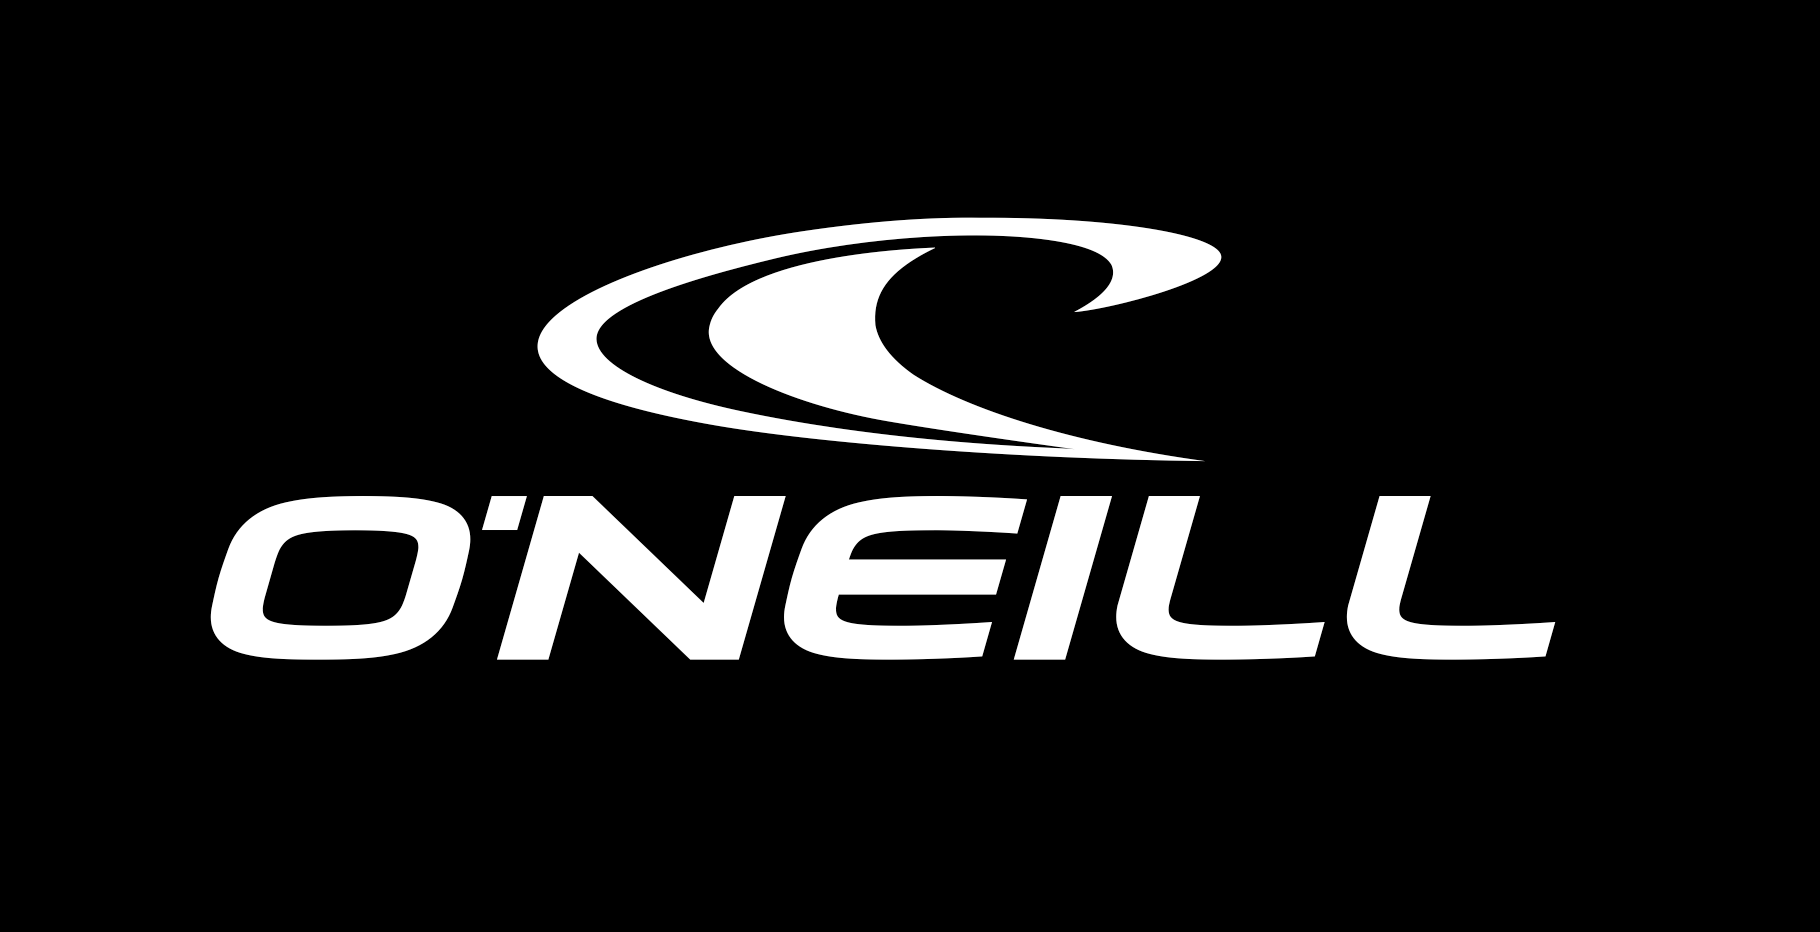 Surfwear Company Logo - O'Neill logo - Black | :D | Surf logo, Logos, Clothing brand logos